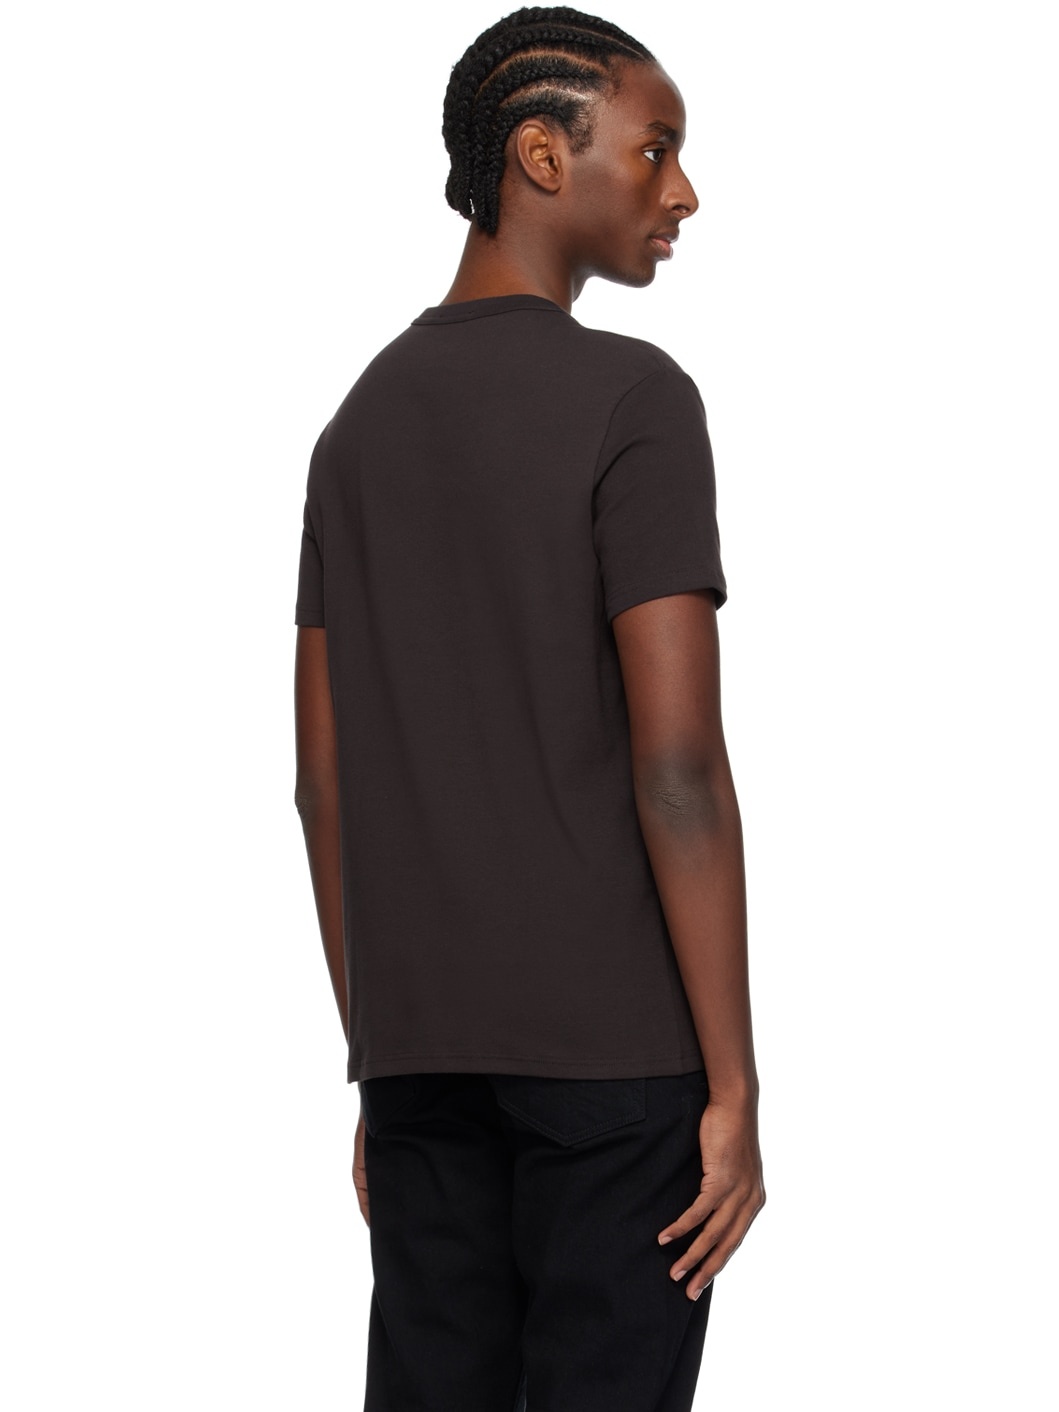 Black Crewneck T-Shirt - 3